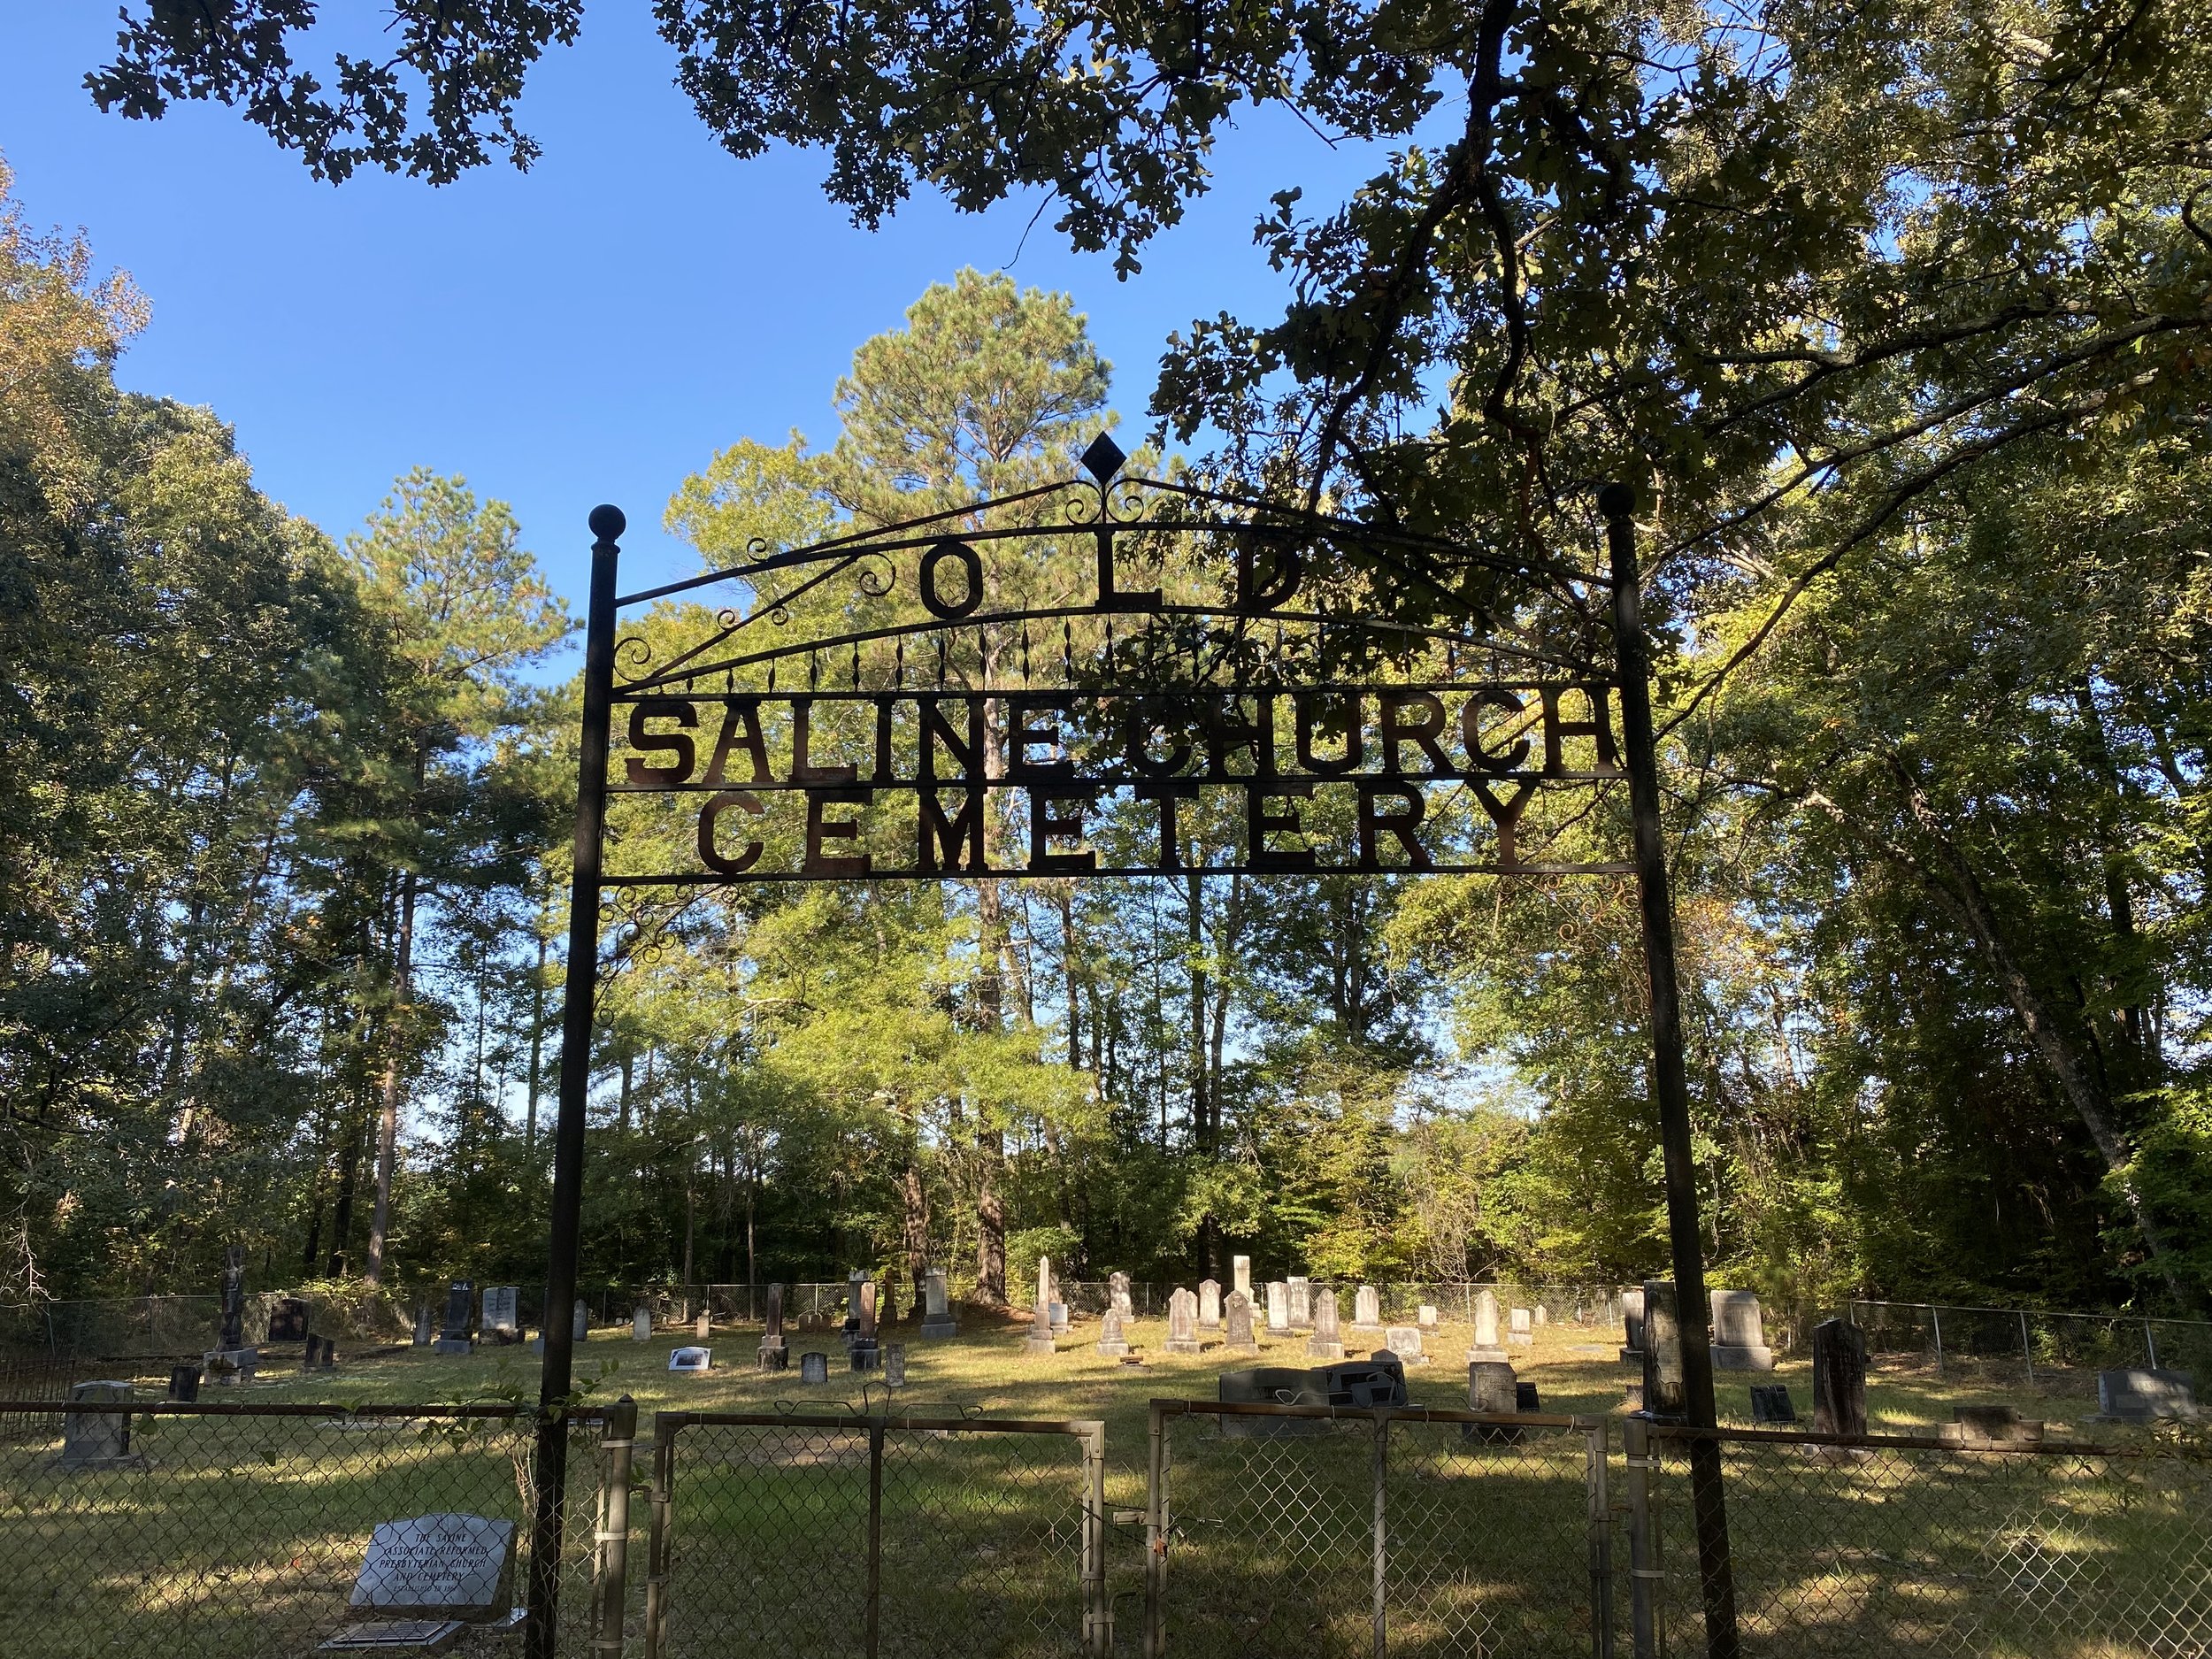  The Old Saline Church Cemetery, outside Monticello, Arkansas. 